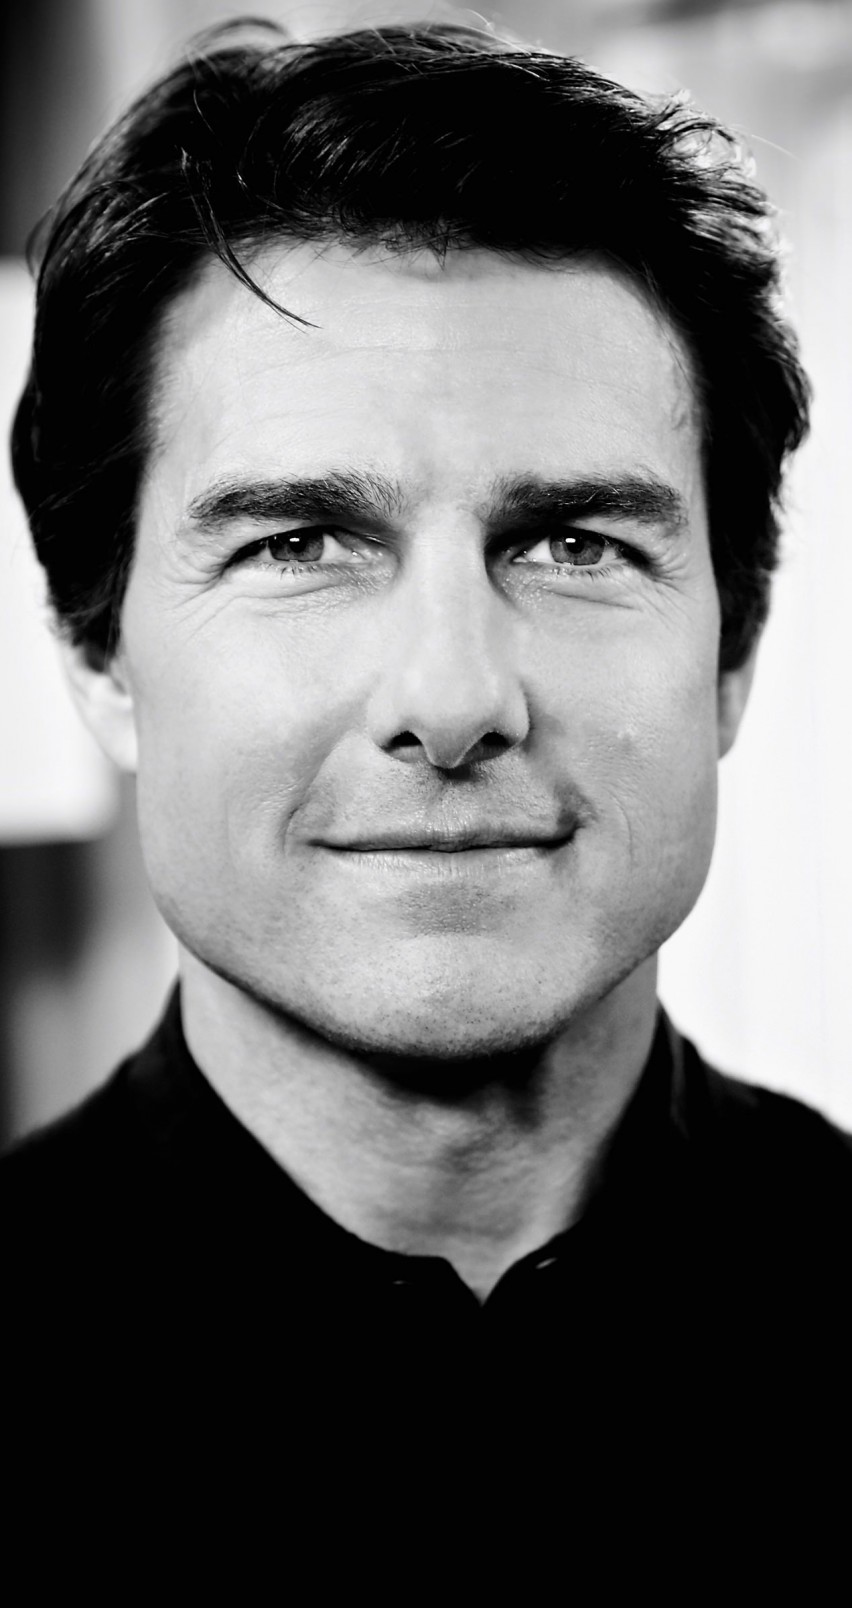 Tom Cruise Black & White Portrait Wallpaper for Apple iPhone 6 / 6s